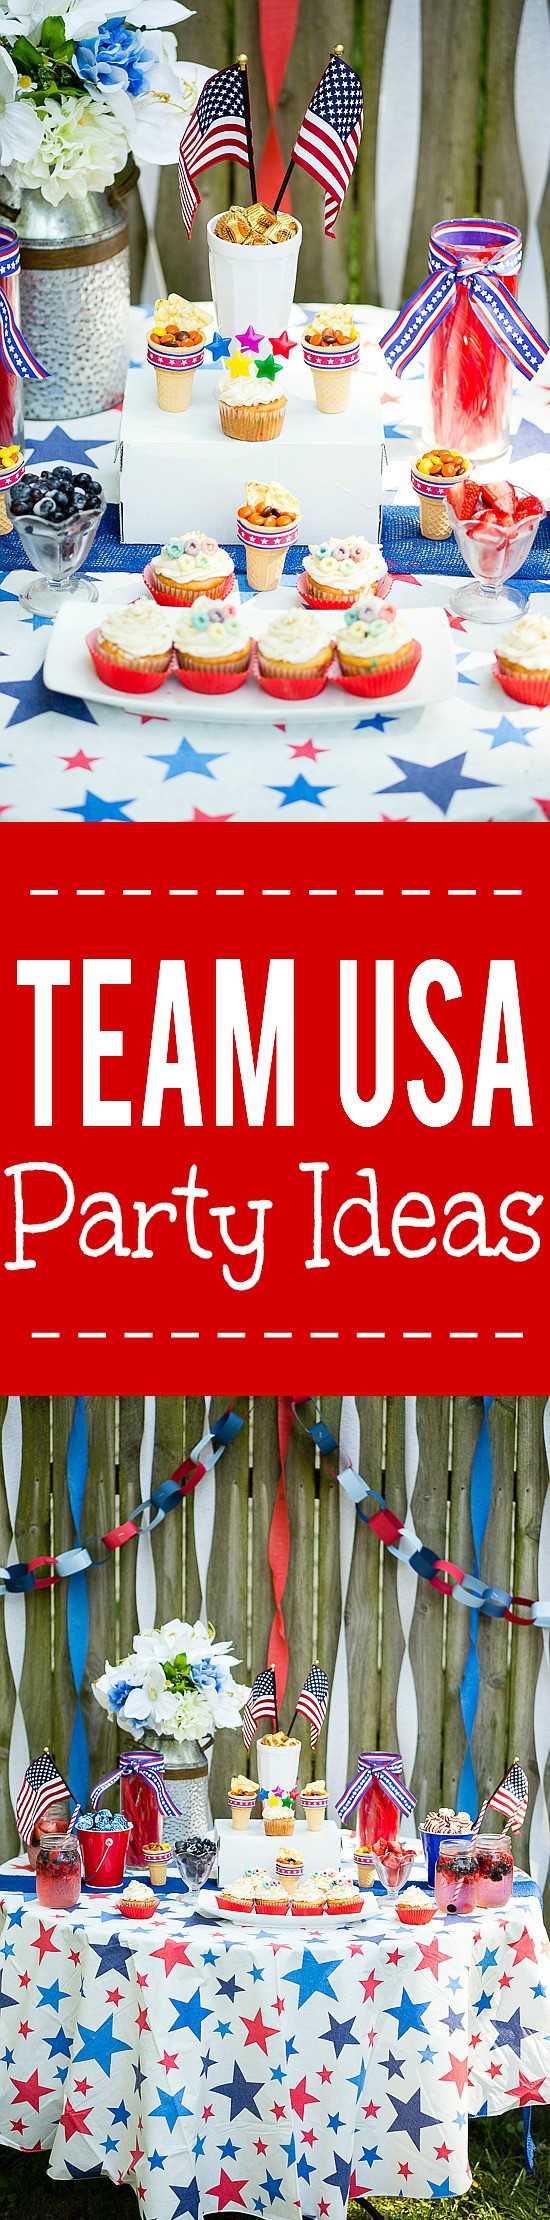 Team Party Ideas
 Team USA Summer Sports Party Ideas